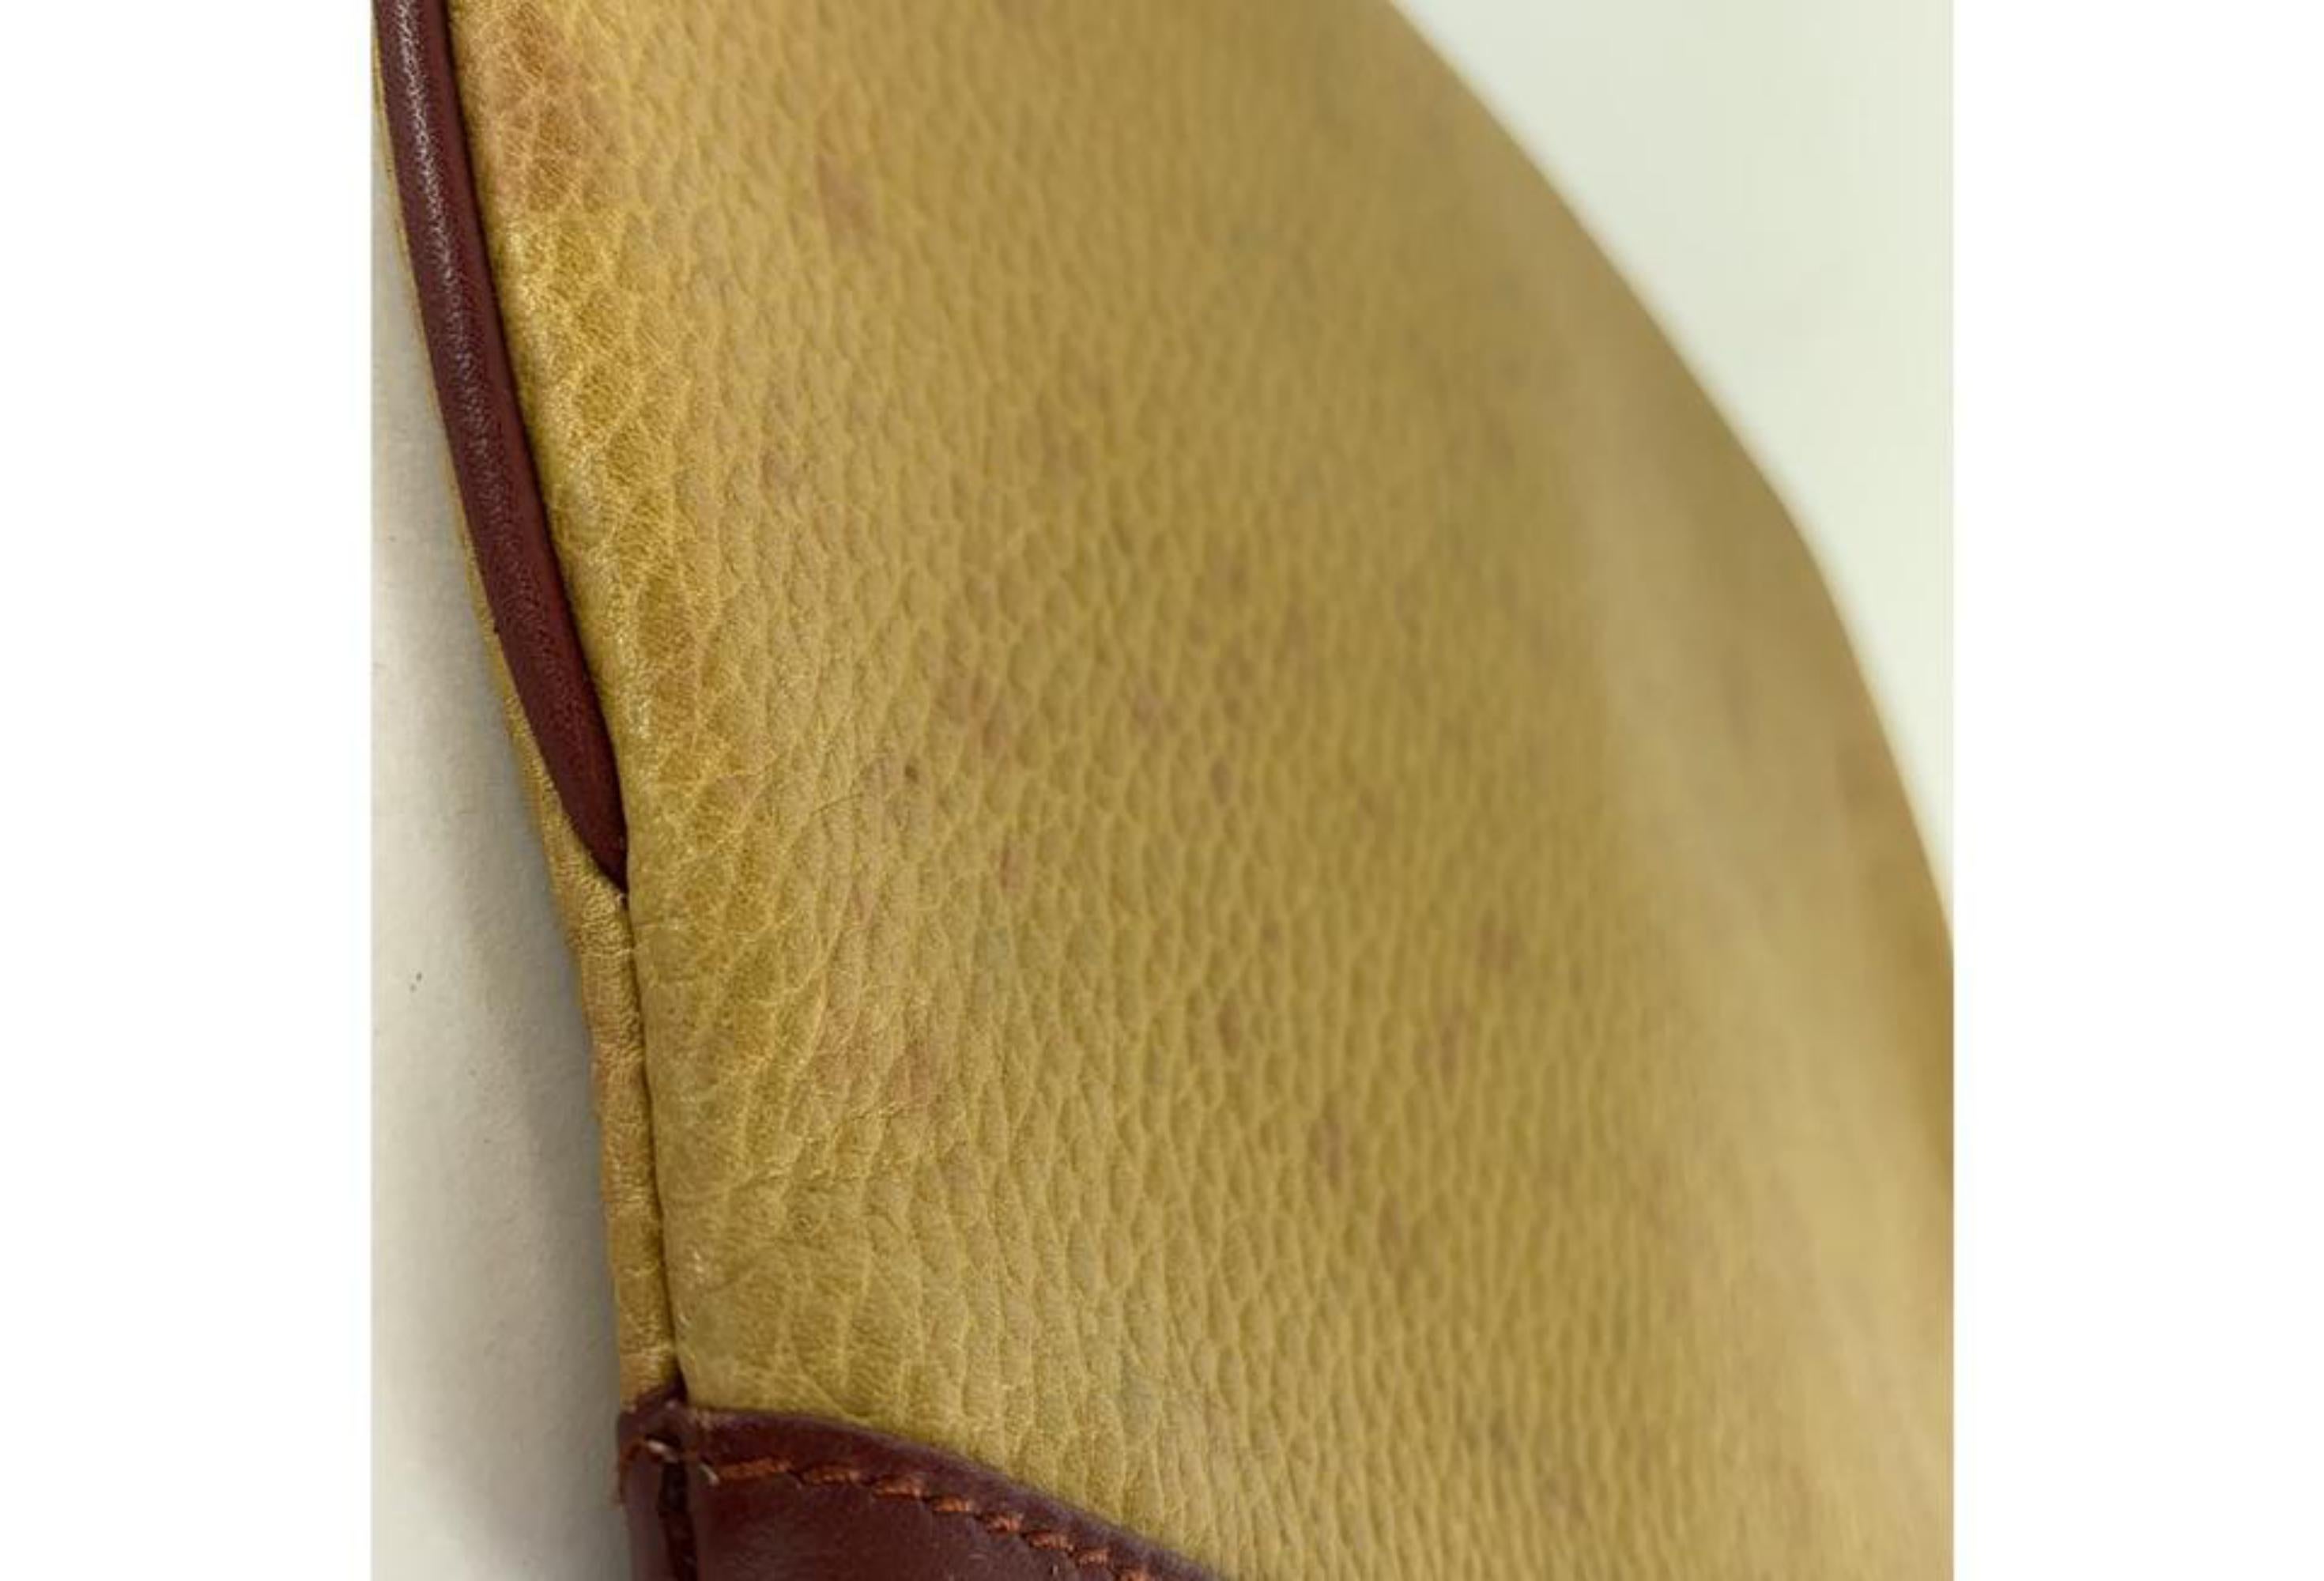 Cartier Beige Leather Clutch Bag 33ct712s 7